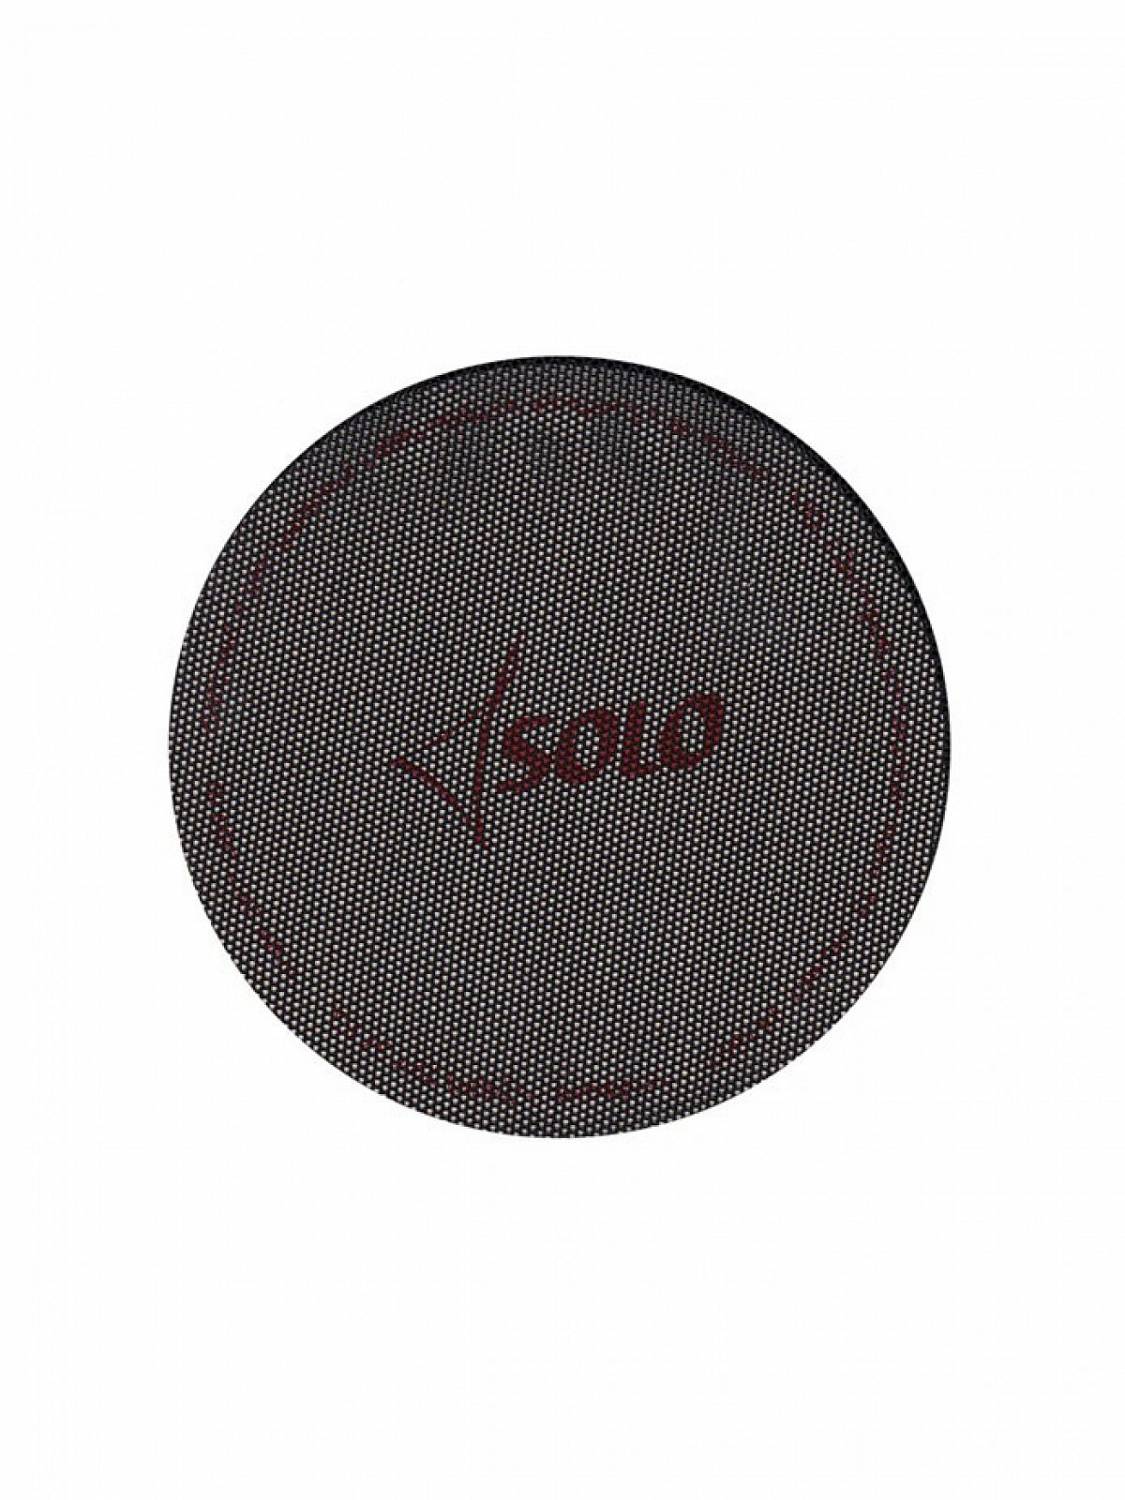 Сеточка на пучок SOLO SA1 (чёрная, размер М)